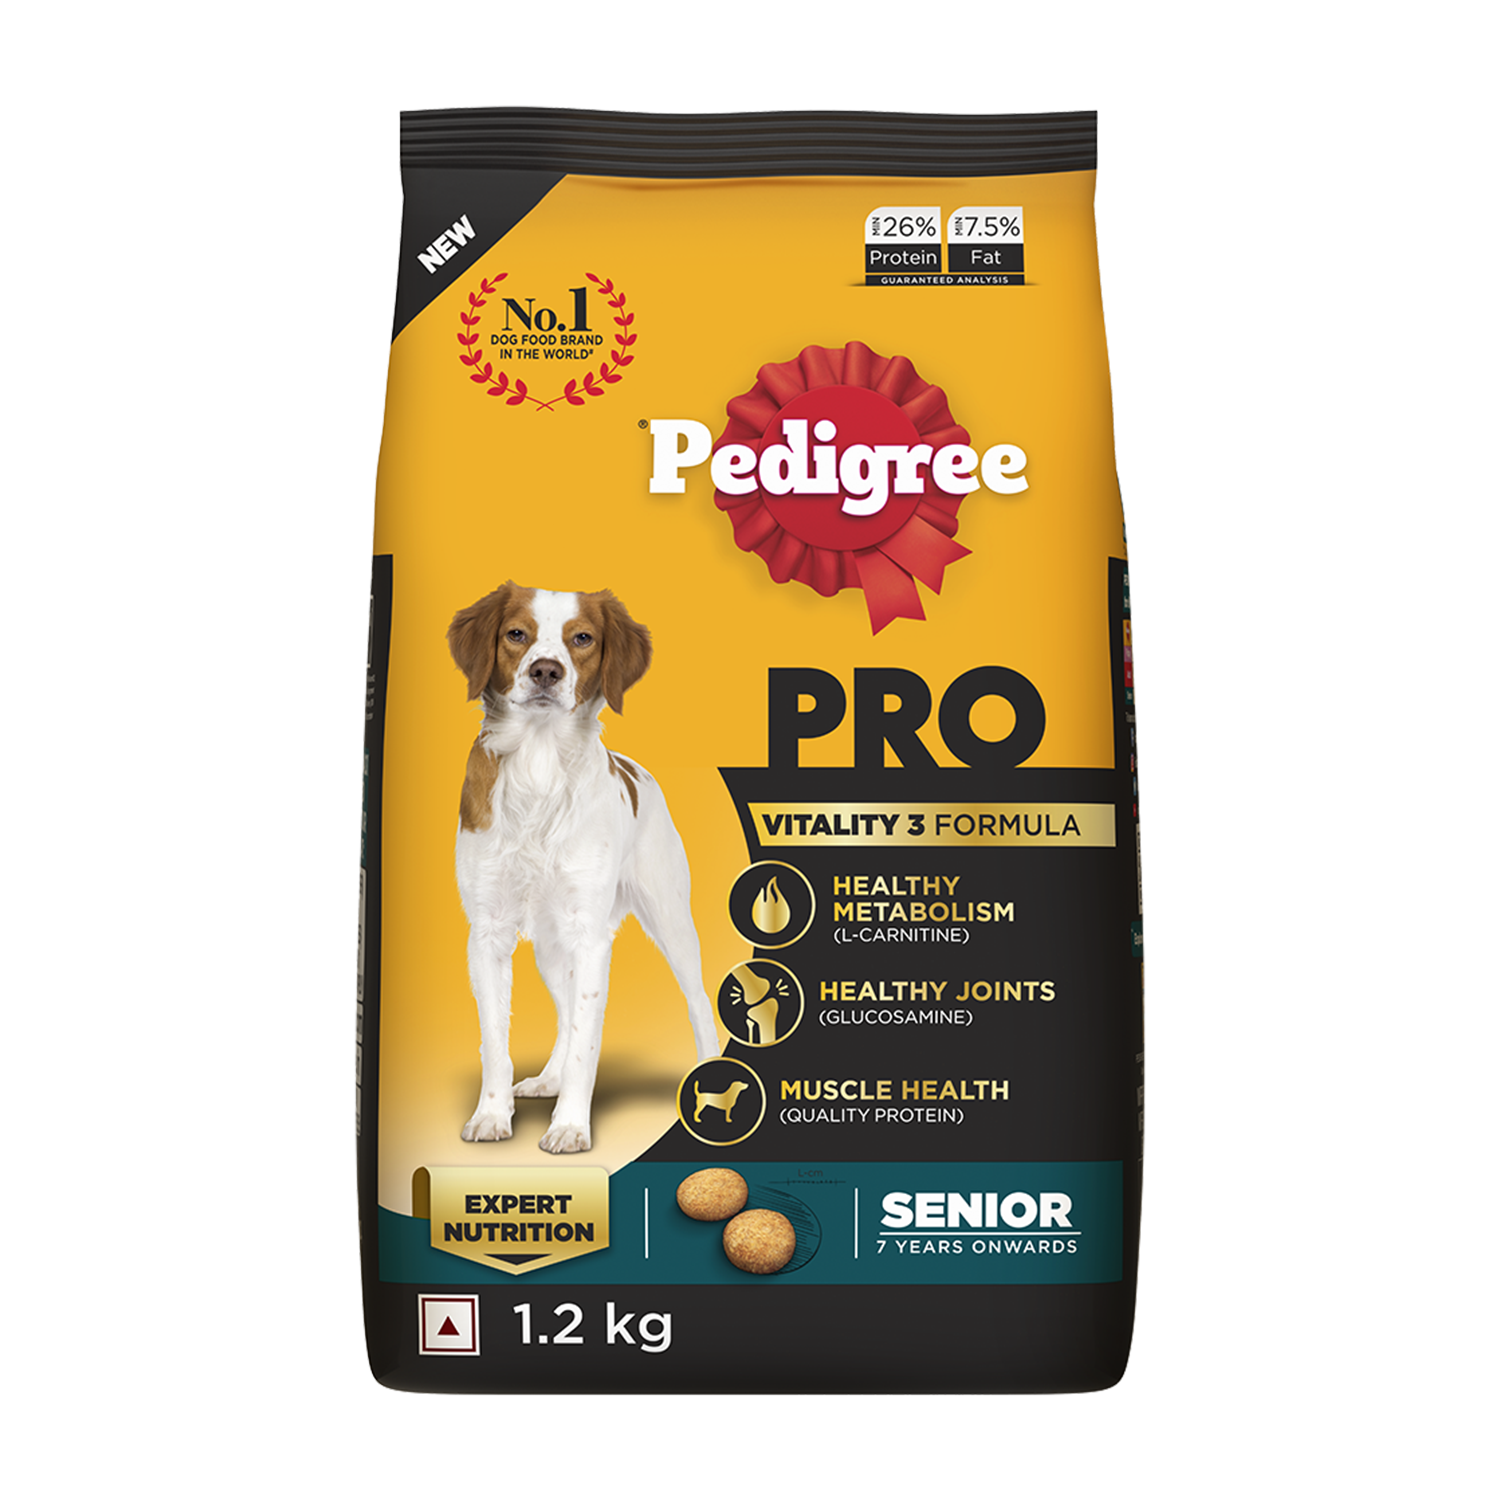 Senior-1.2kg-f | pedigree | dog food | petzsetgo